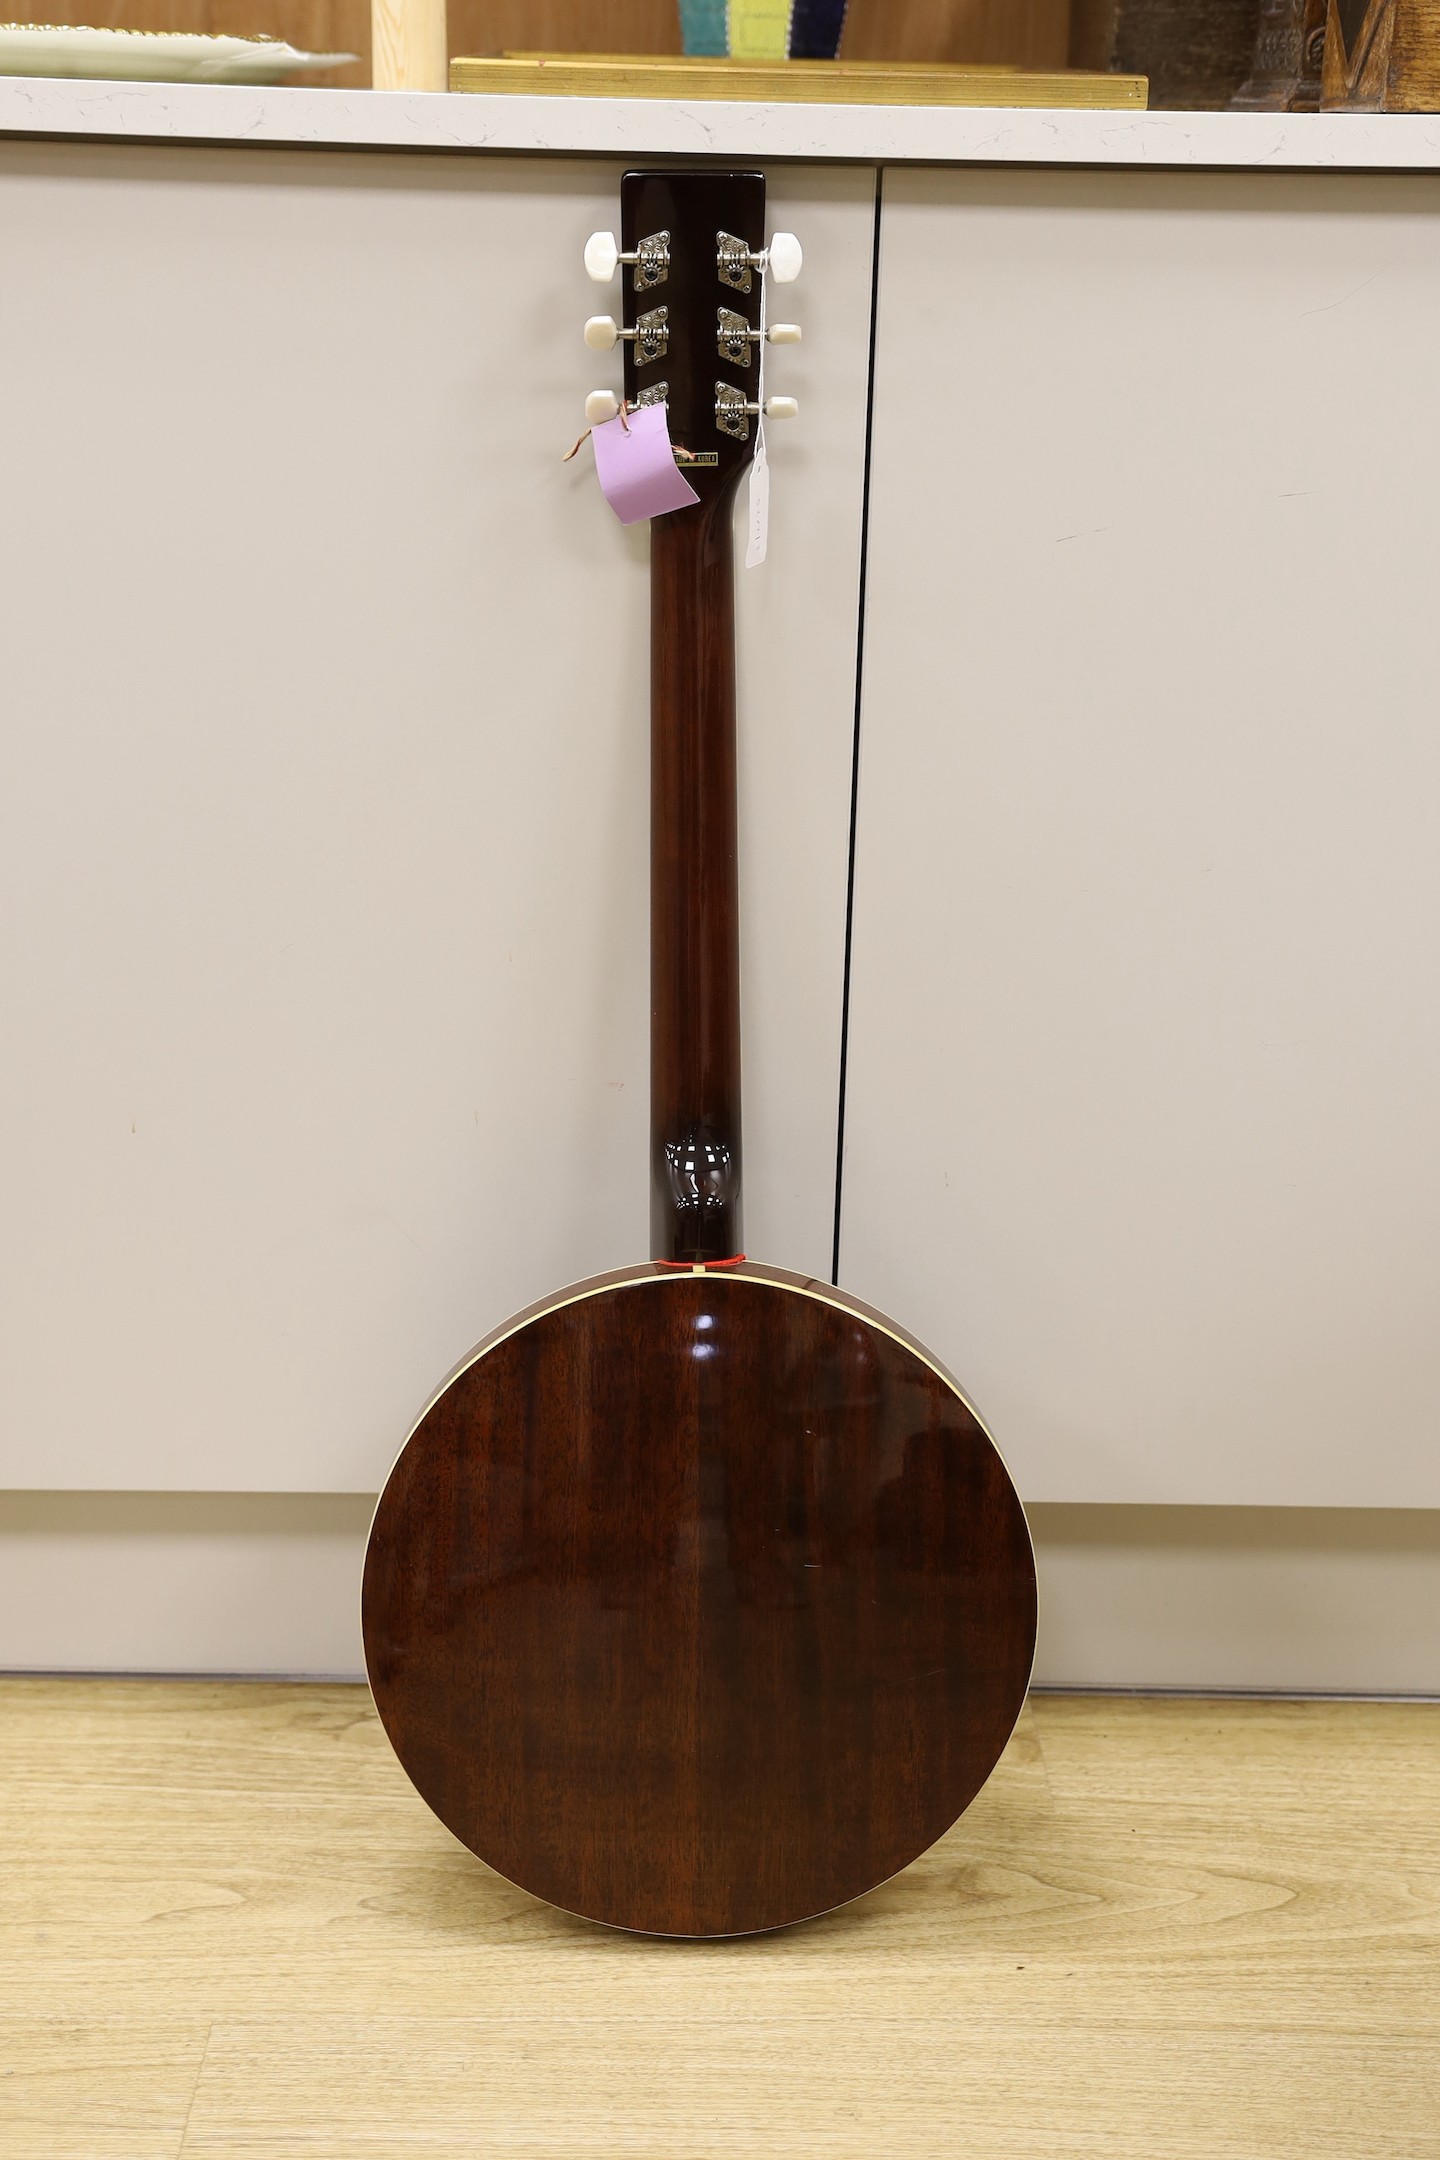 An Ashbury banjo - U.S.A. Weatherking with soft padded case, Banjo 86.5 cms high